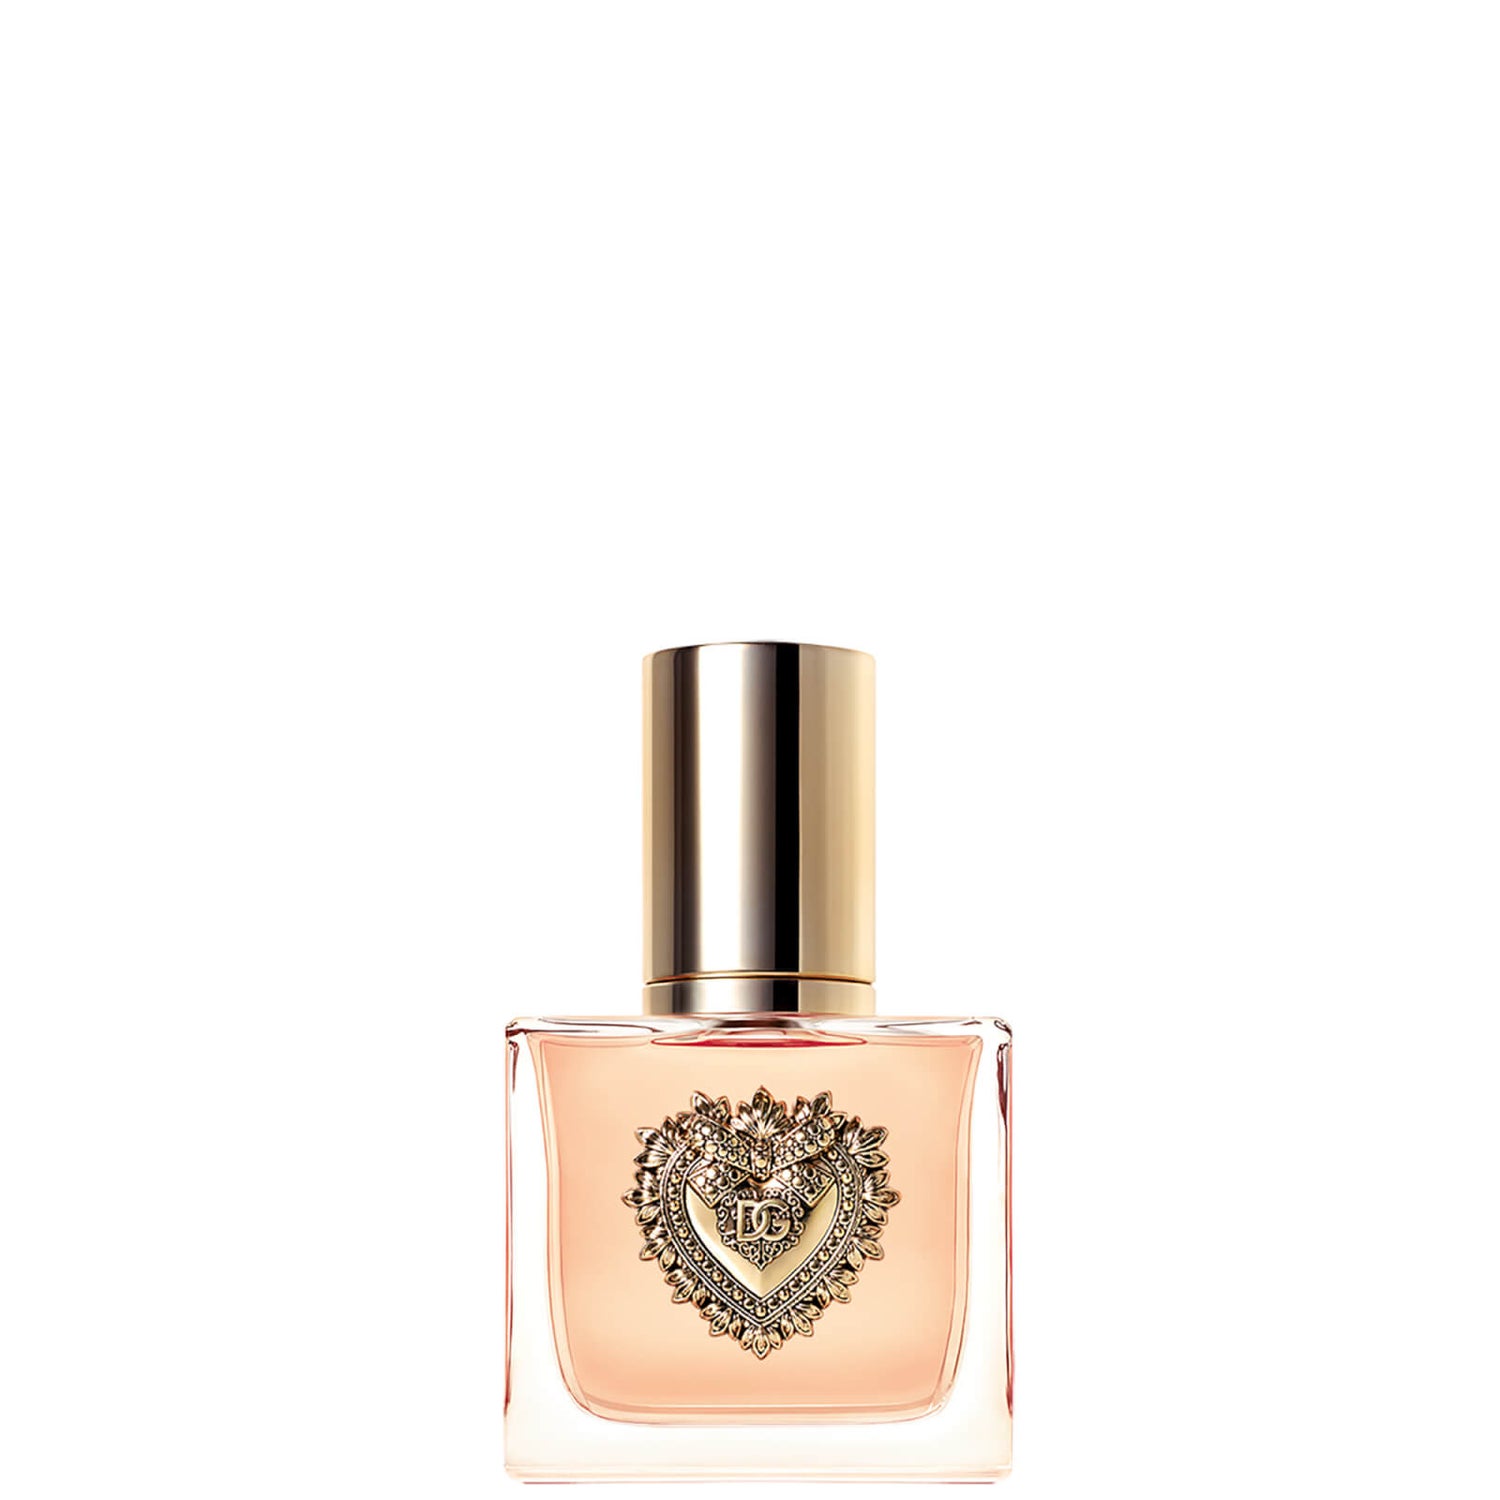 Dolce&Gabbana Devotion Eau de Parfum Spray 30ml - LOOKFANTASTIC